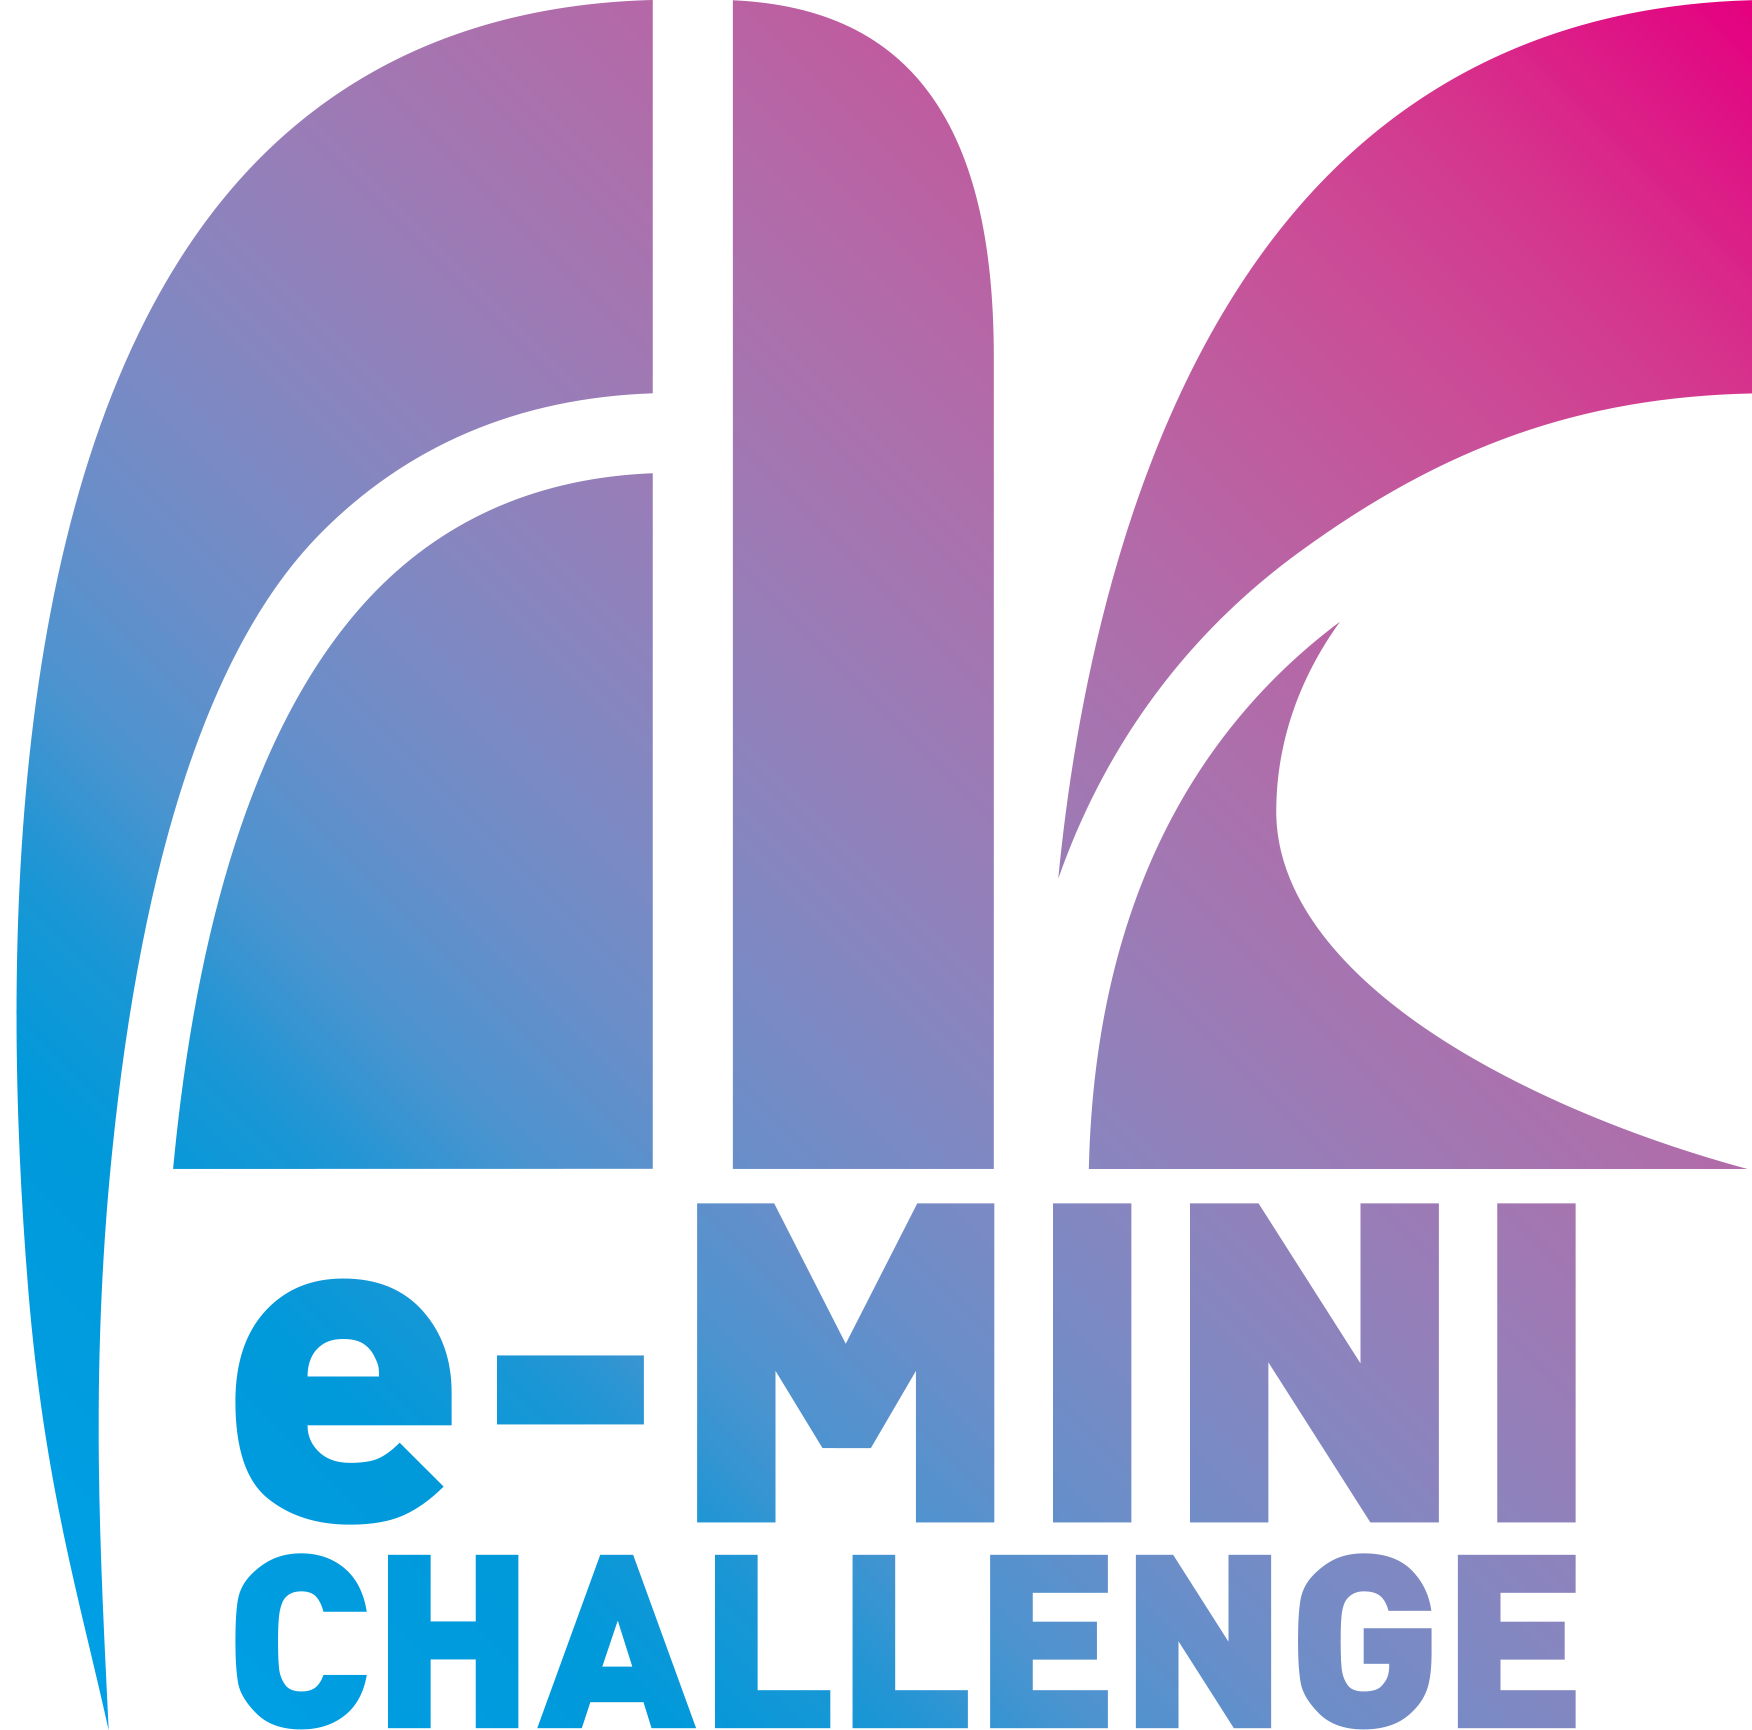 e-MINI CHALLENGE® 2021 S2 Rd.1 A/B ポイントランキング公開